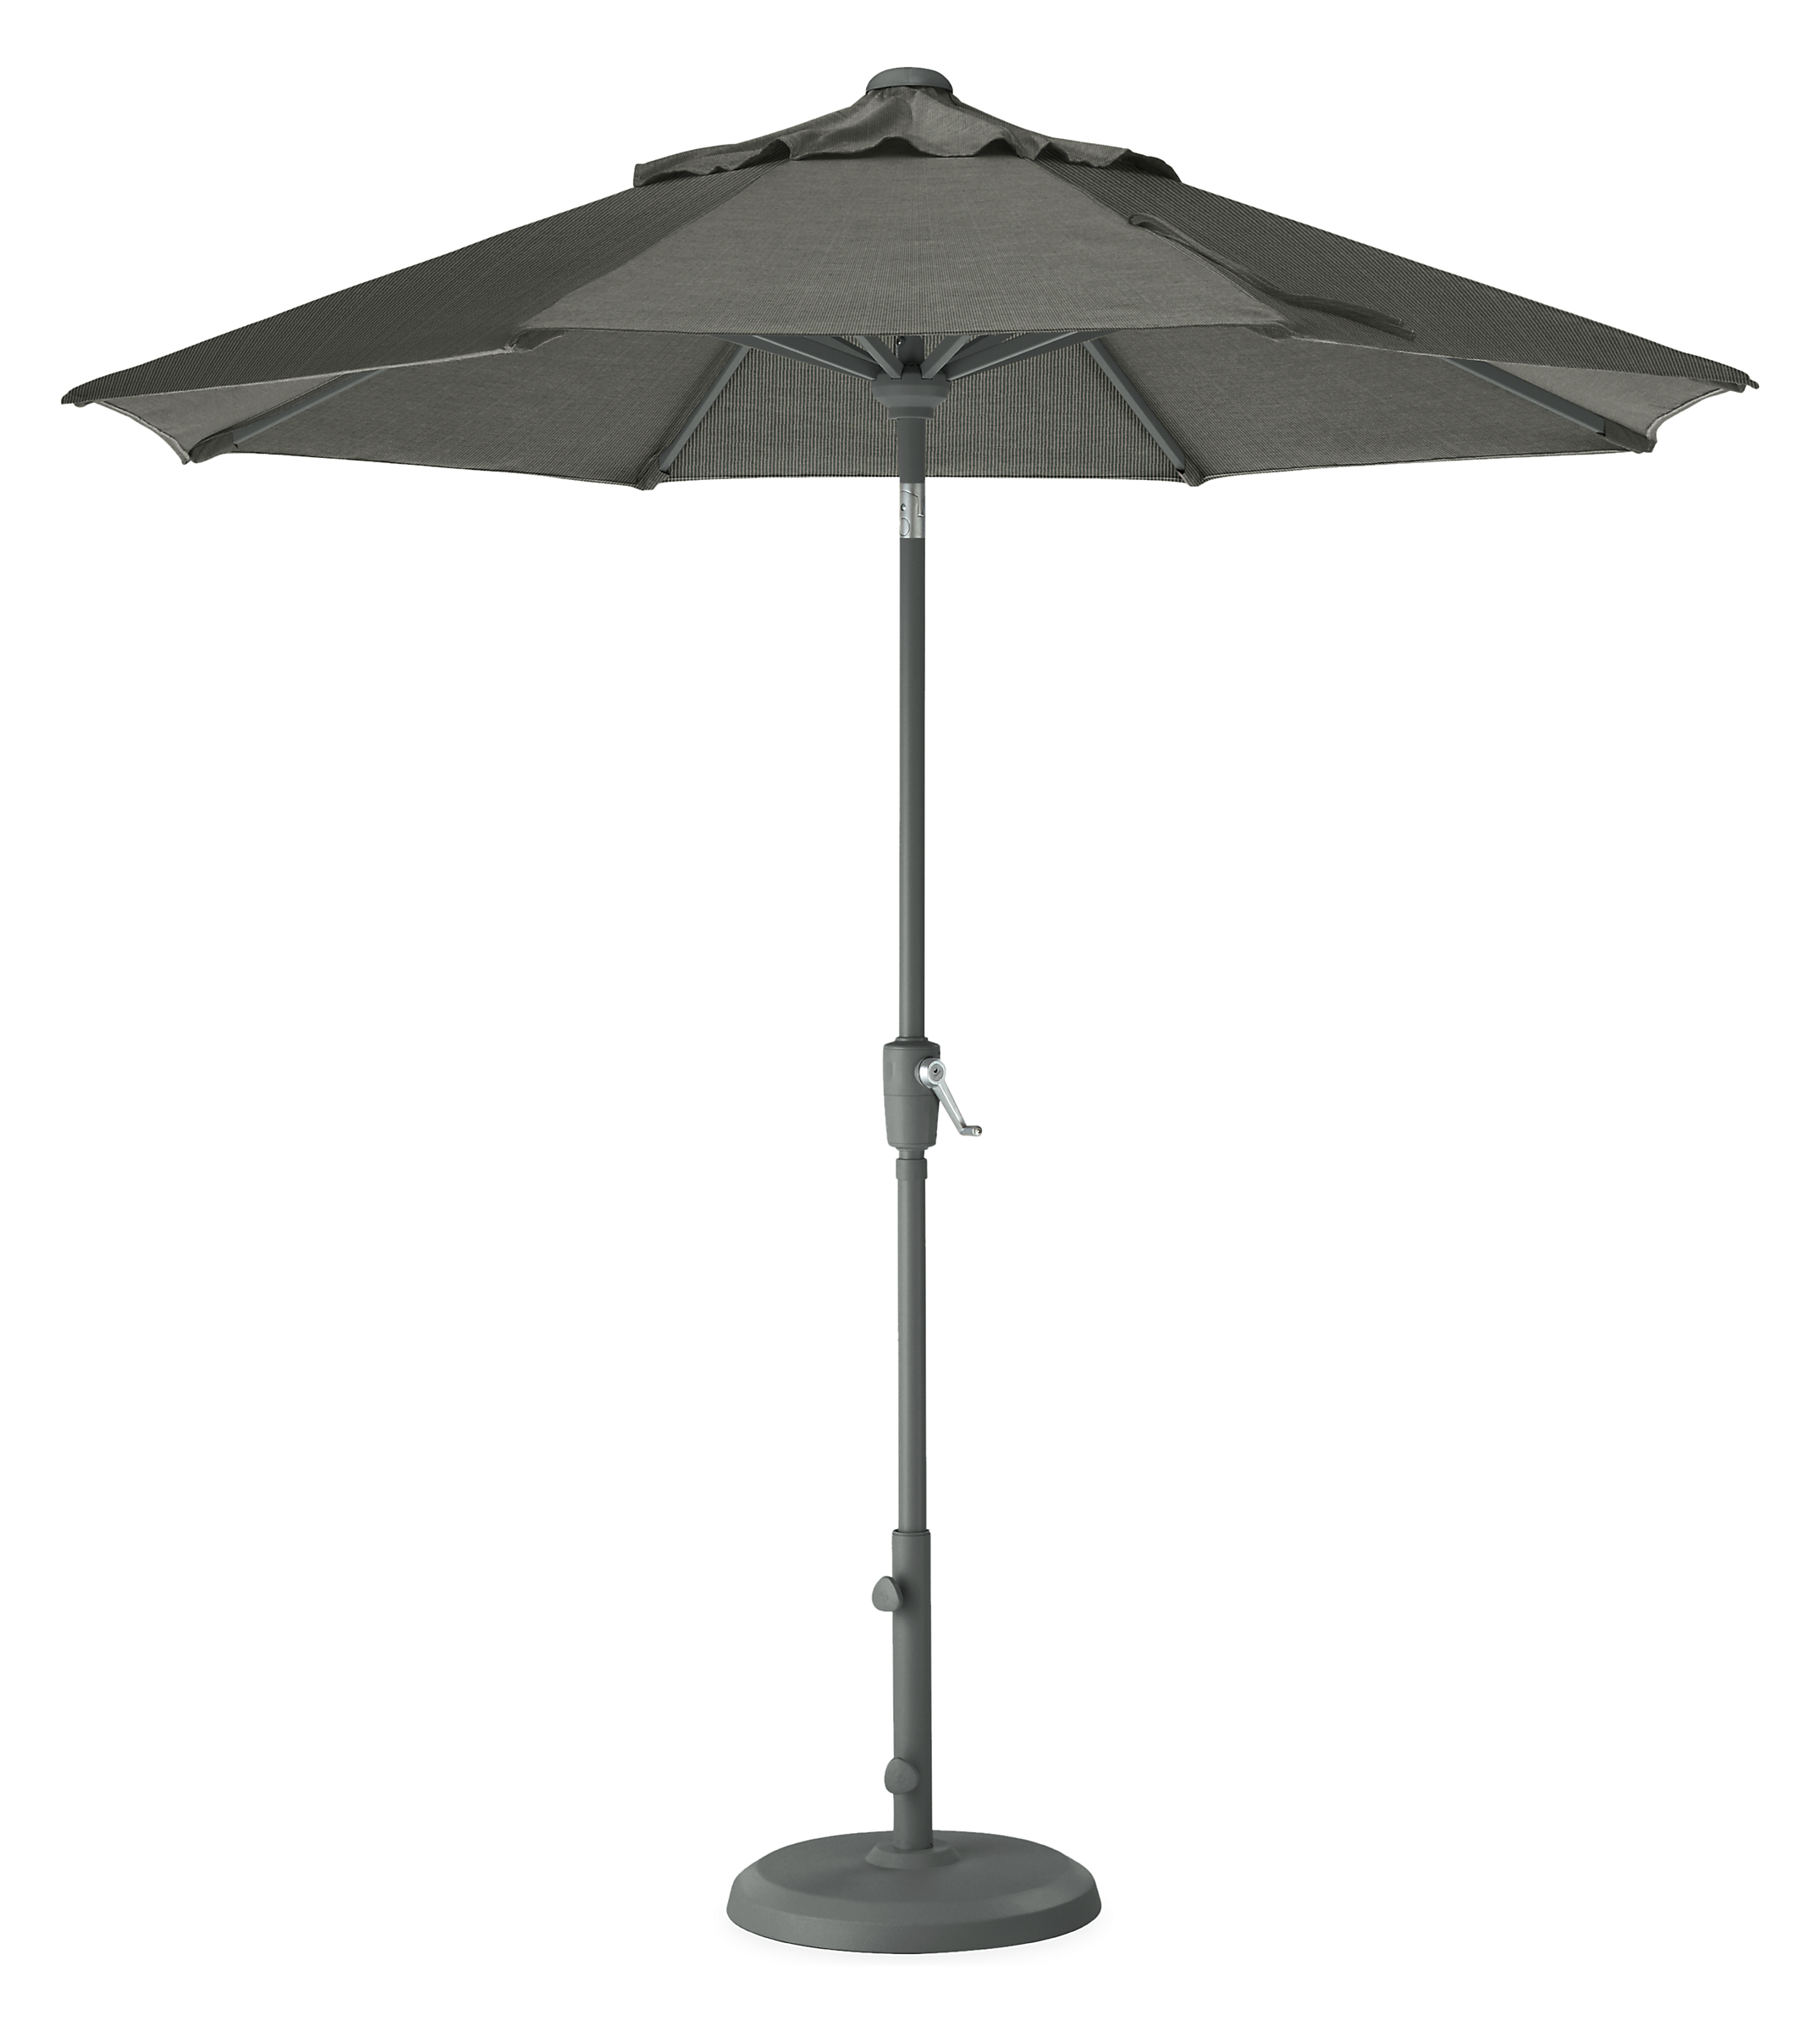 Maui 7.5' Round Patio Umbrella with Base